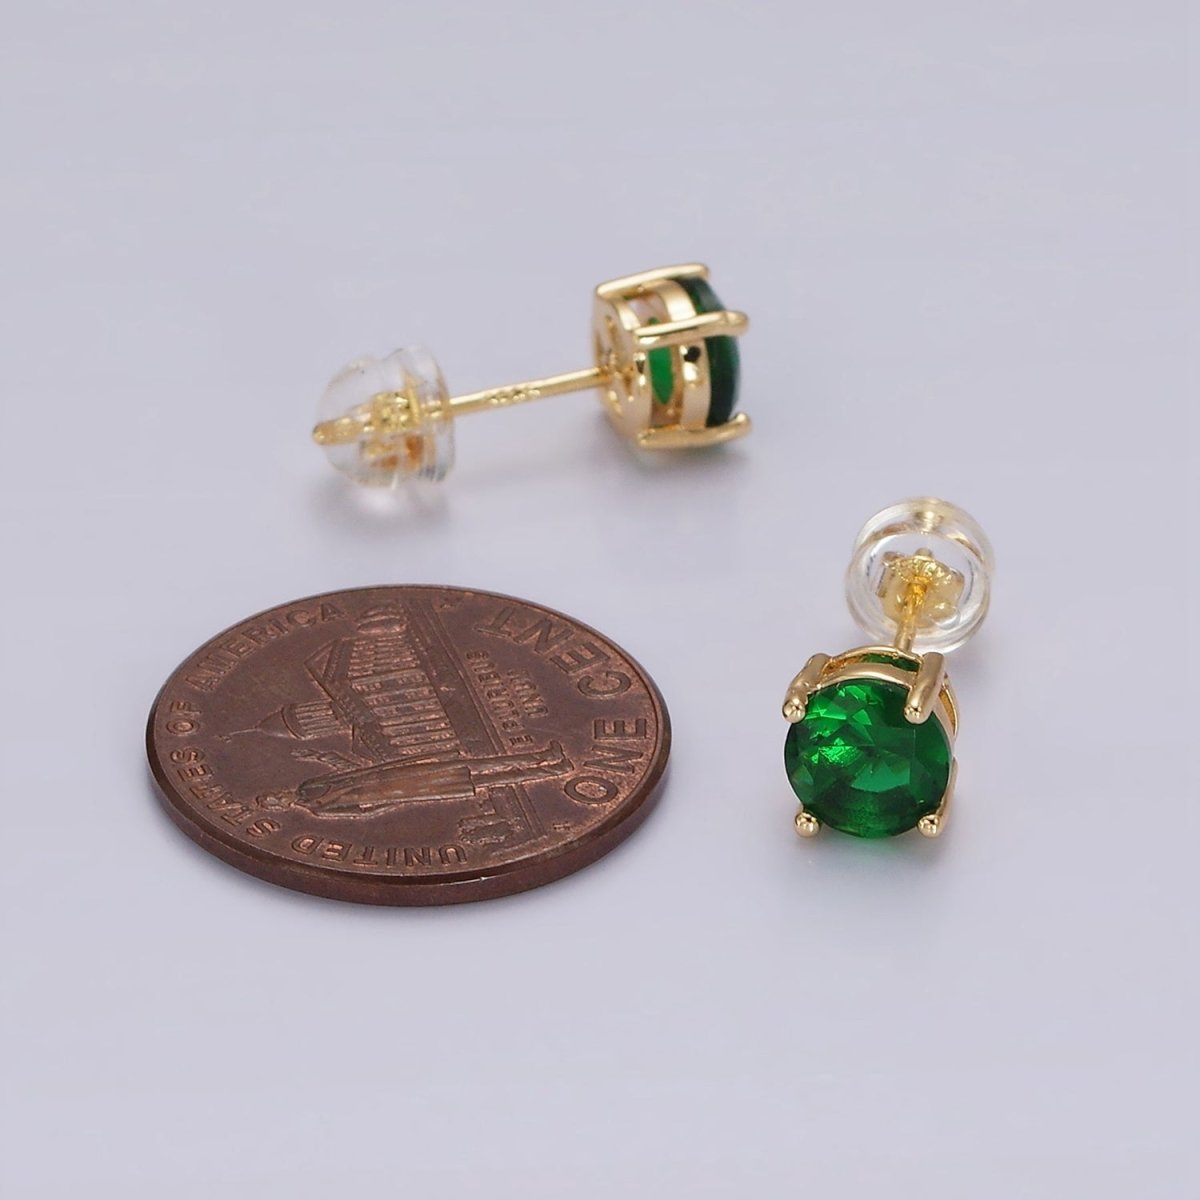 14K Gold Filled Clear, Black, Pink, Green CZ Stud Earrings in Gold & Silver | V300 - V307 - DLUXCA